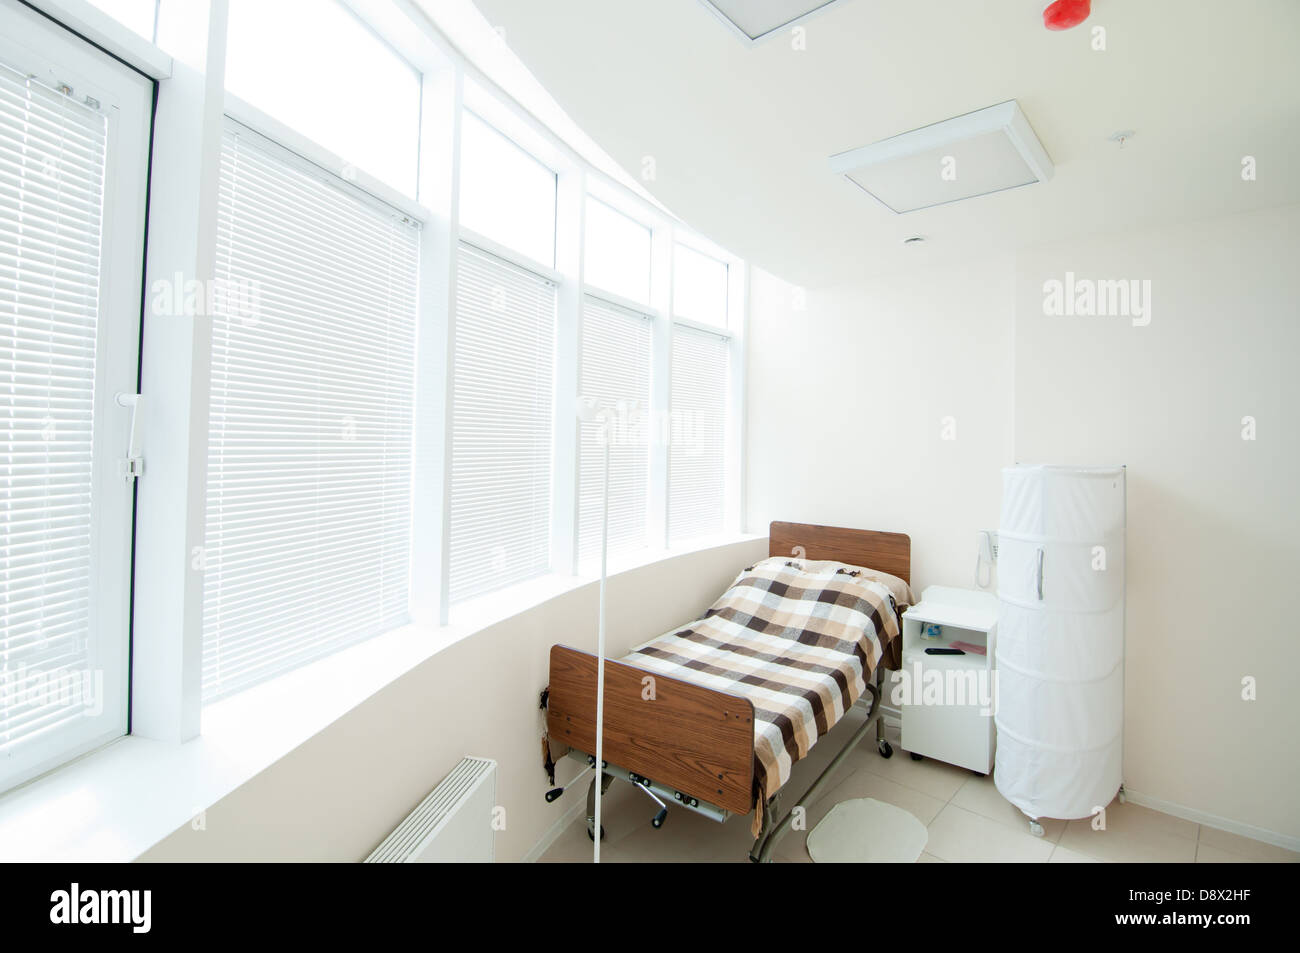 Moscow surgery interior with surgery table, bett, corridor Stock Photo